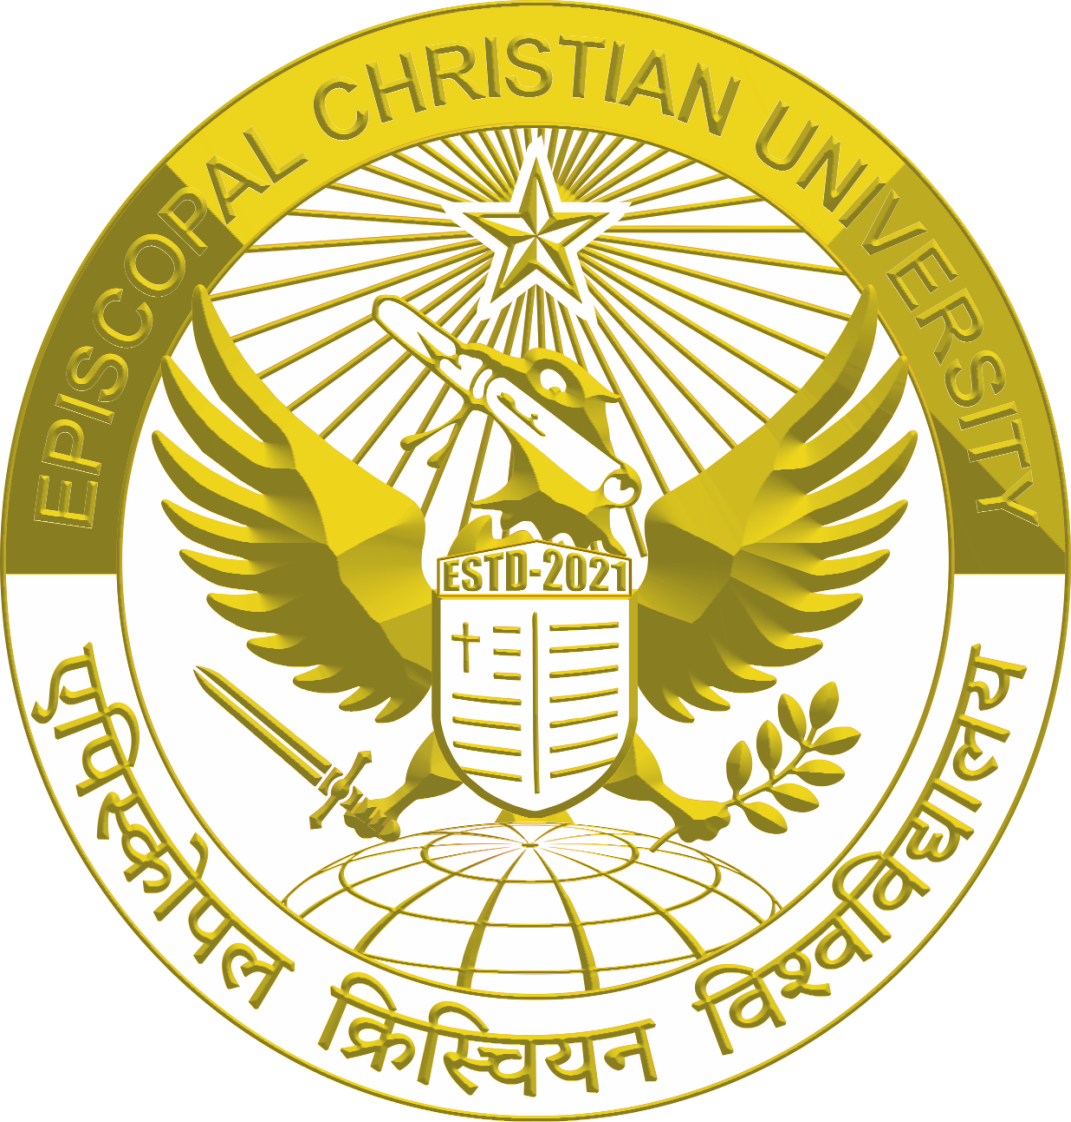 Episcopal Christian University